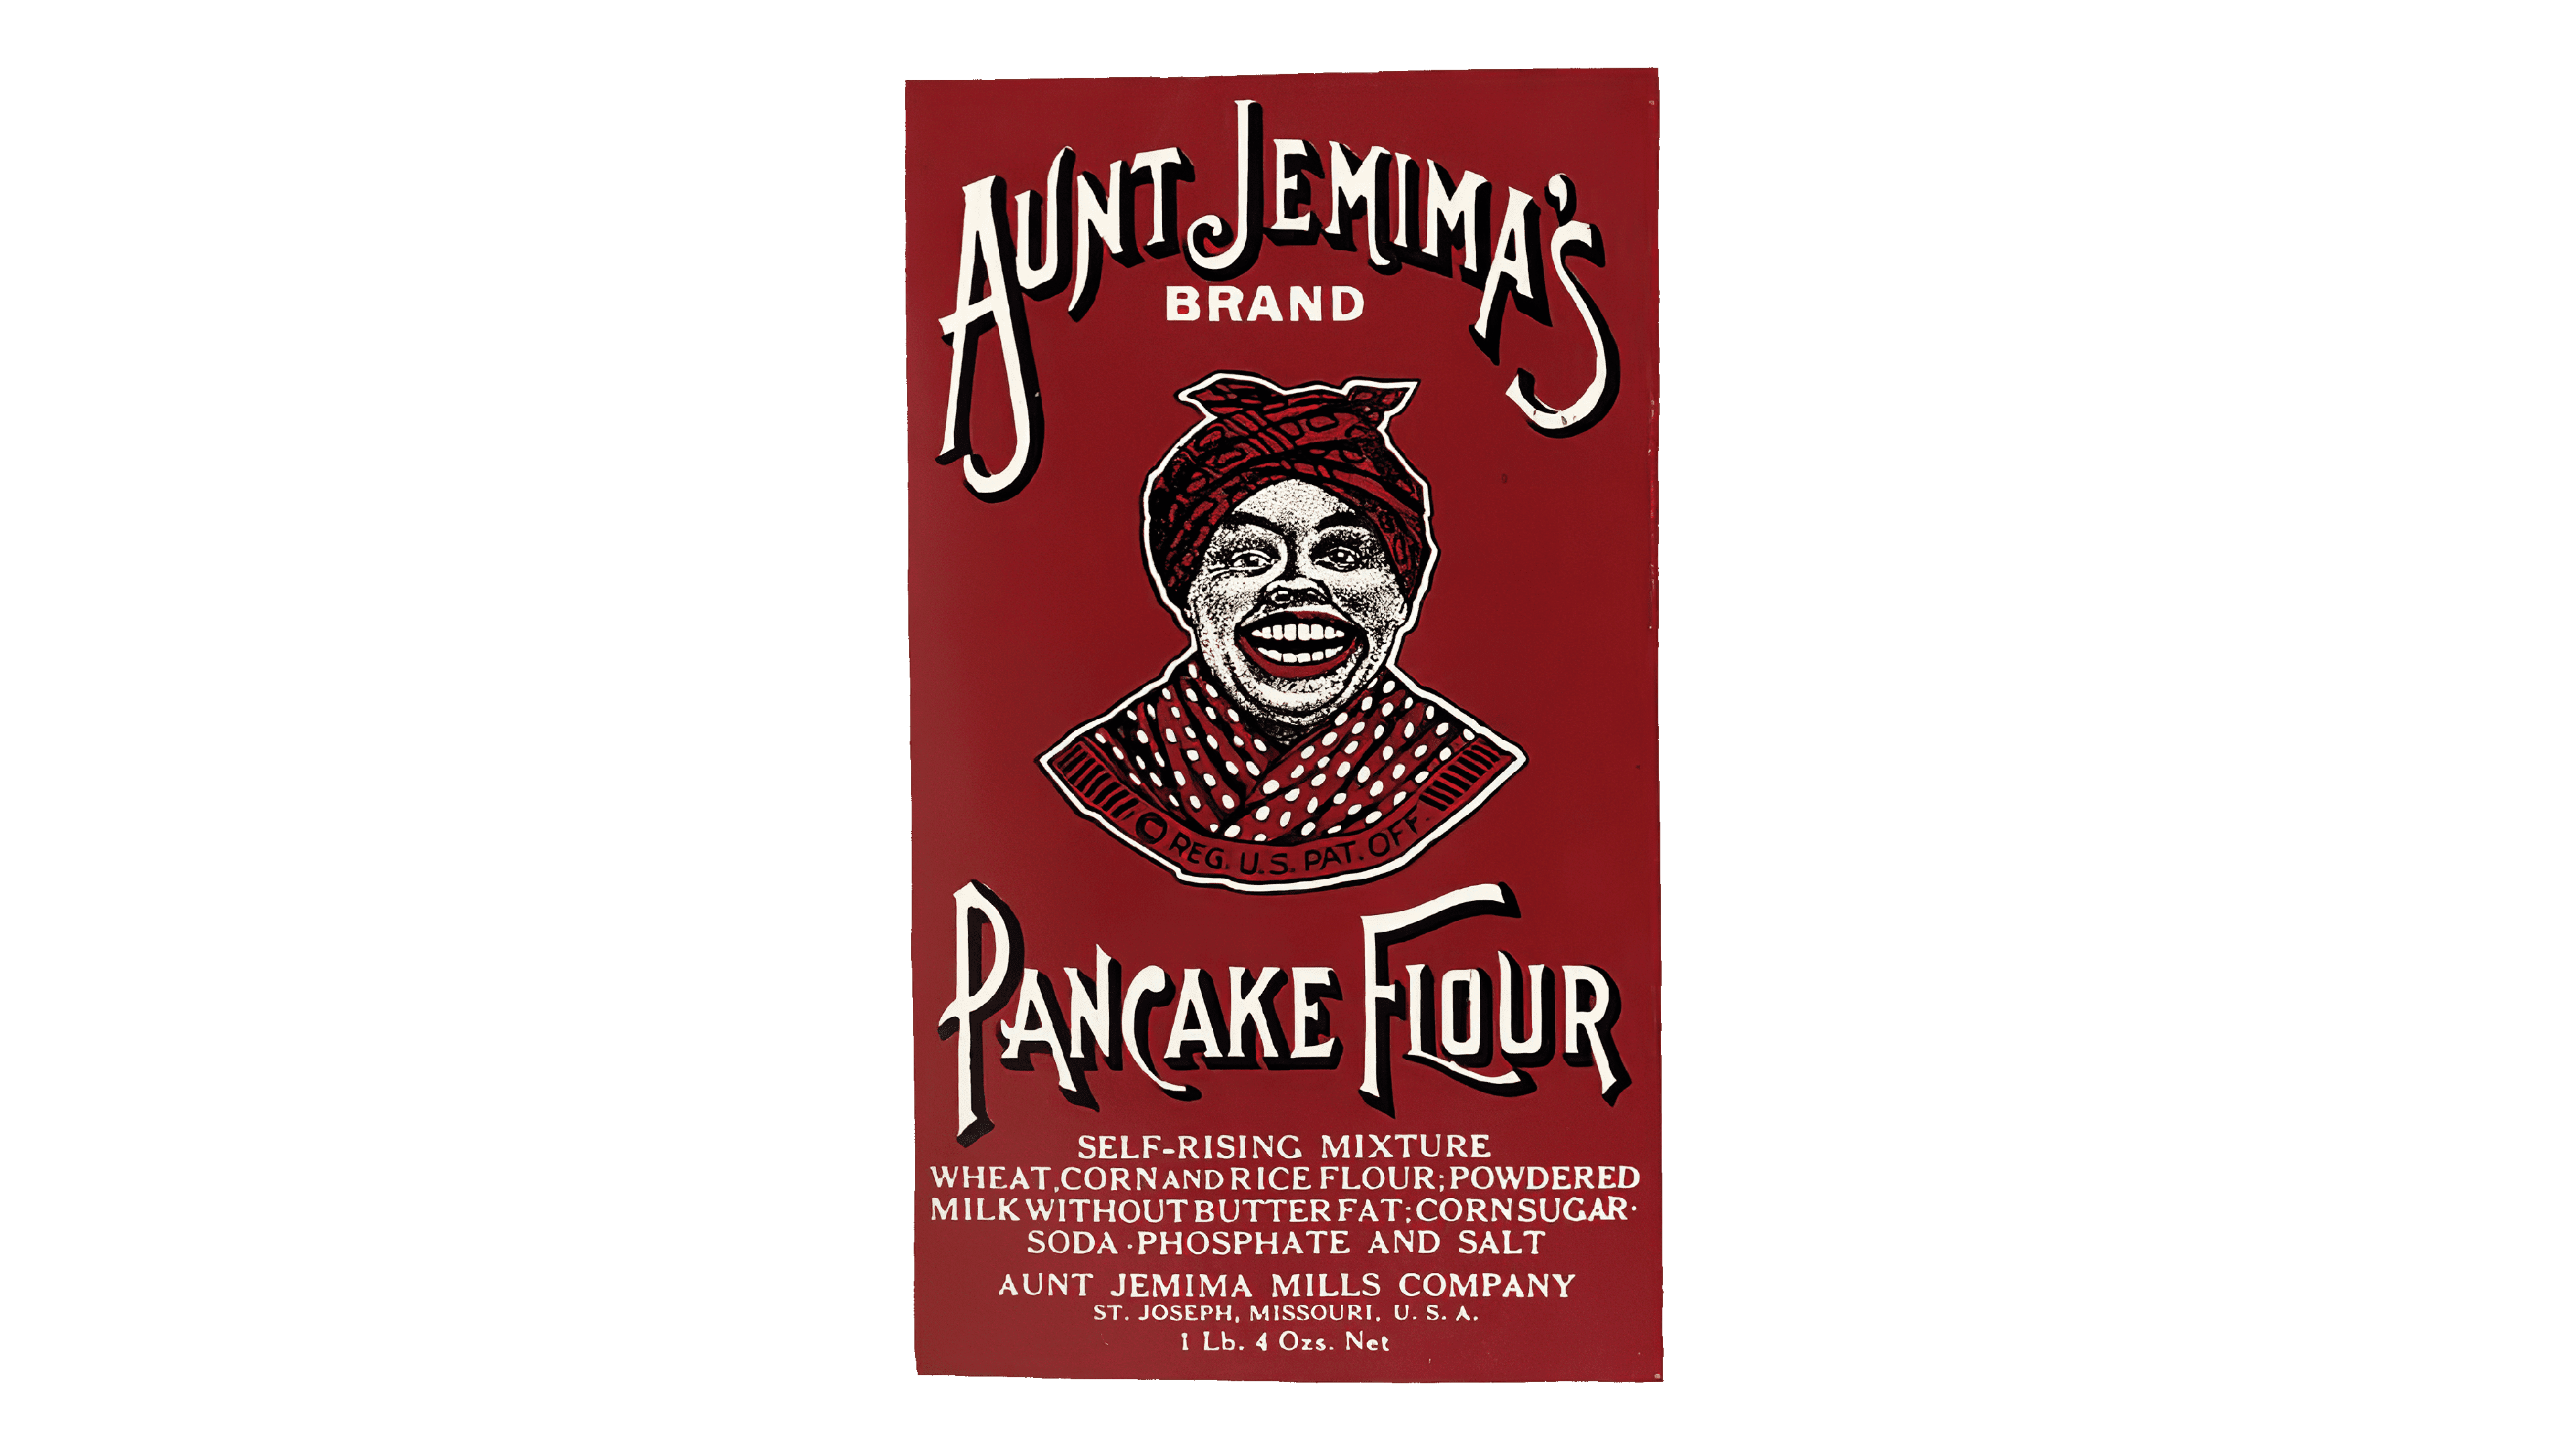 1950 aunt jemima pancake mix